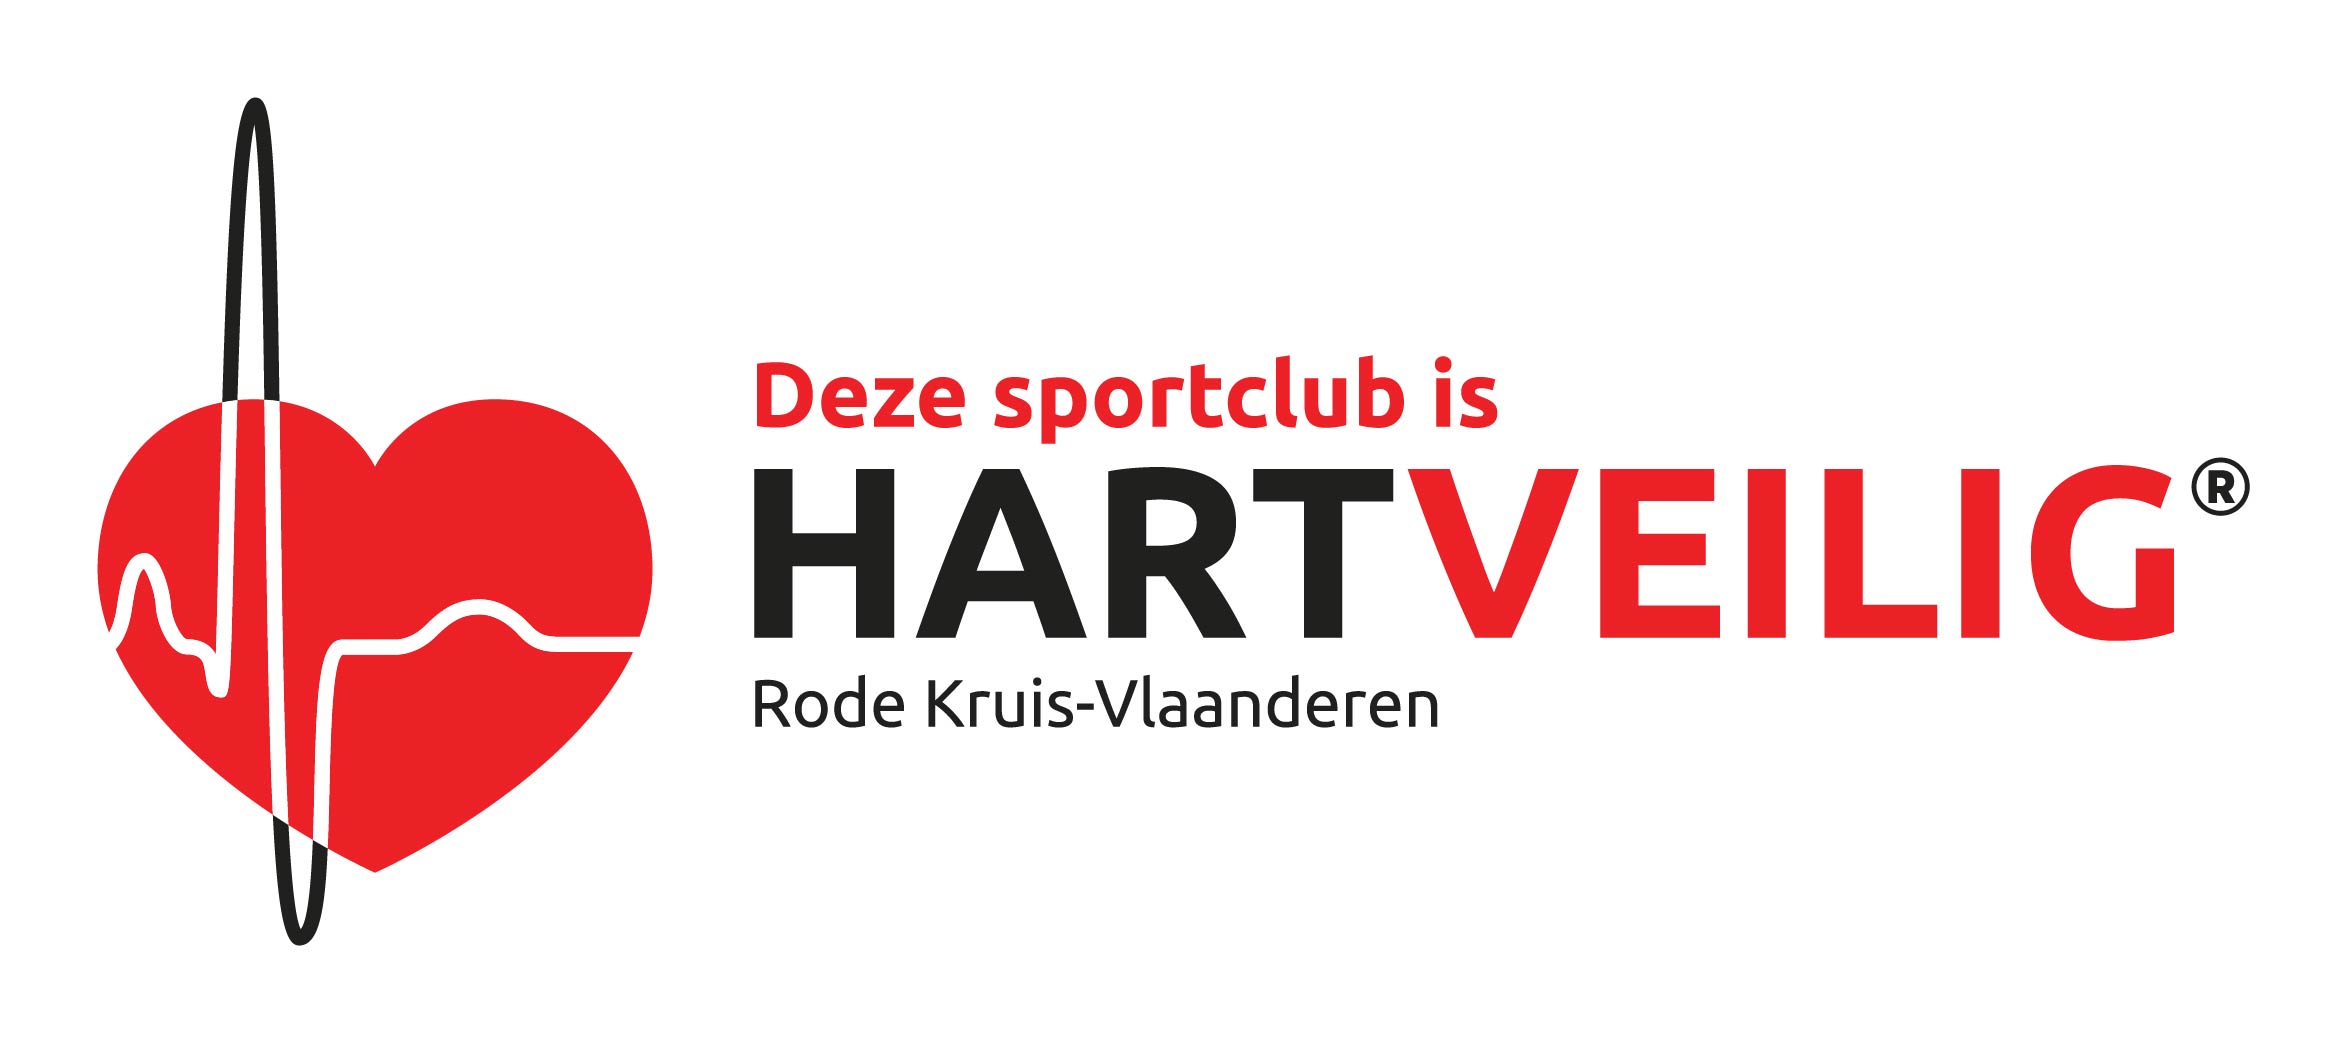 Bord_Sportclub-Hartveilig-RK_rgb.jpg